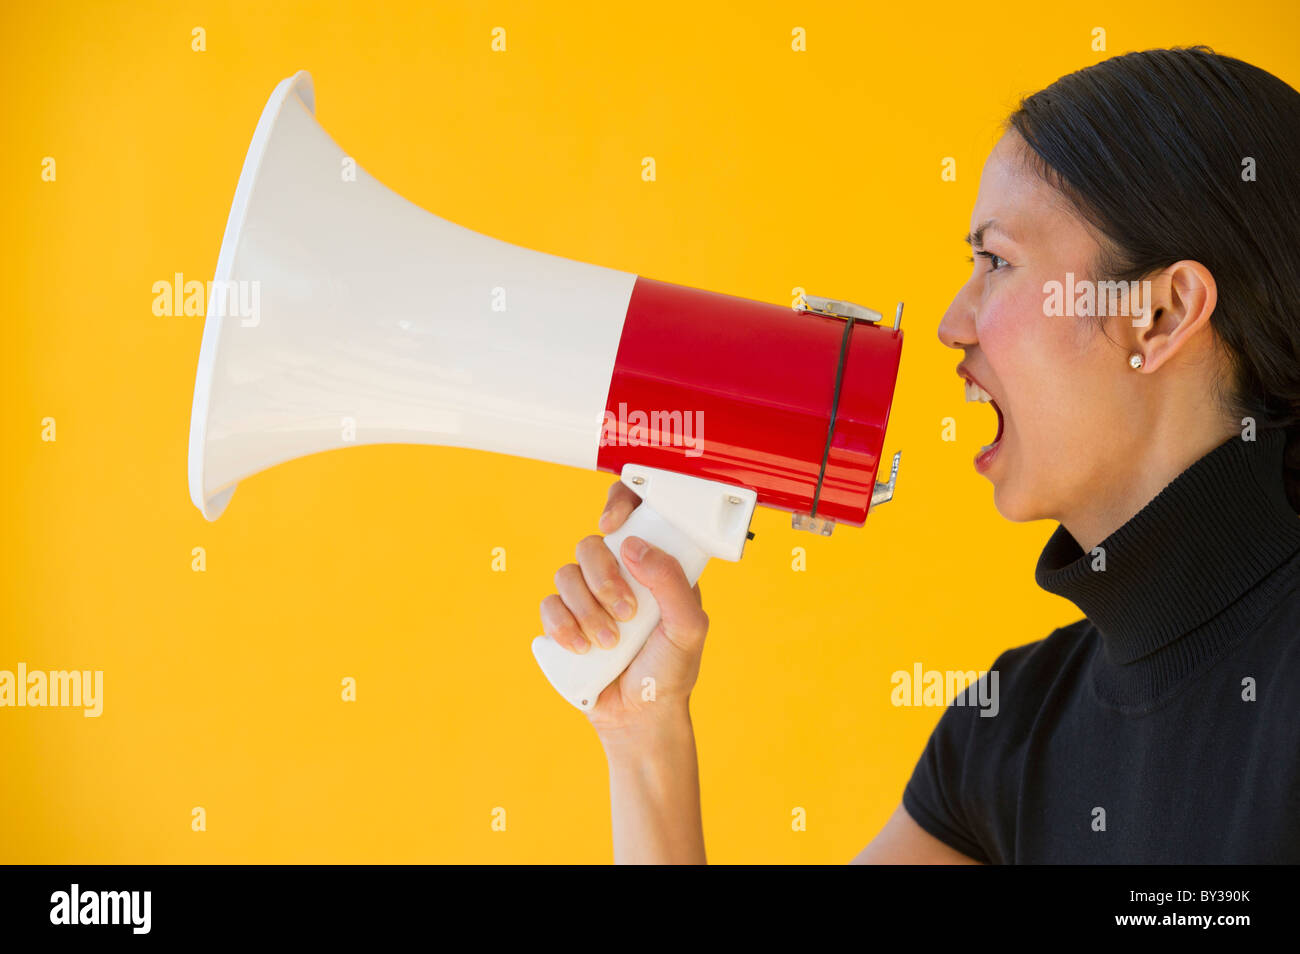 Woman shouting through megaphone Stock Photo